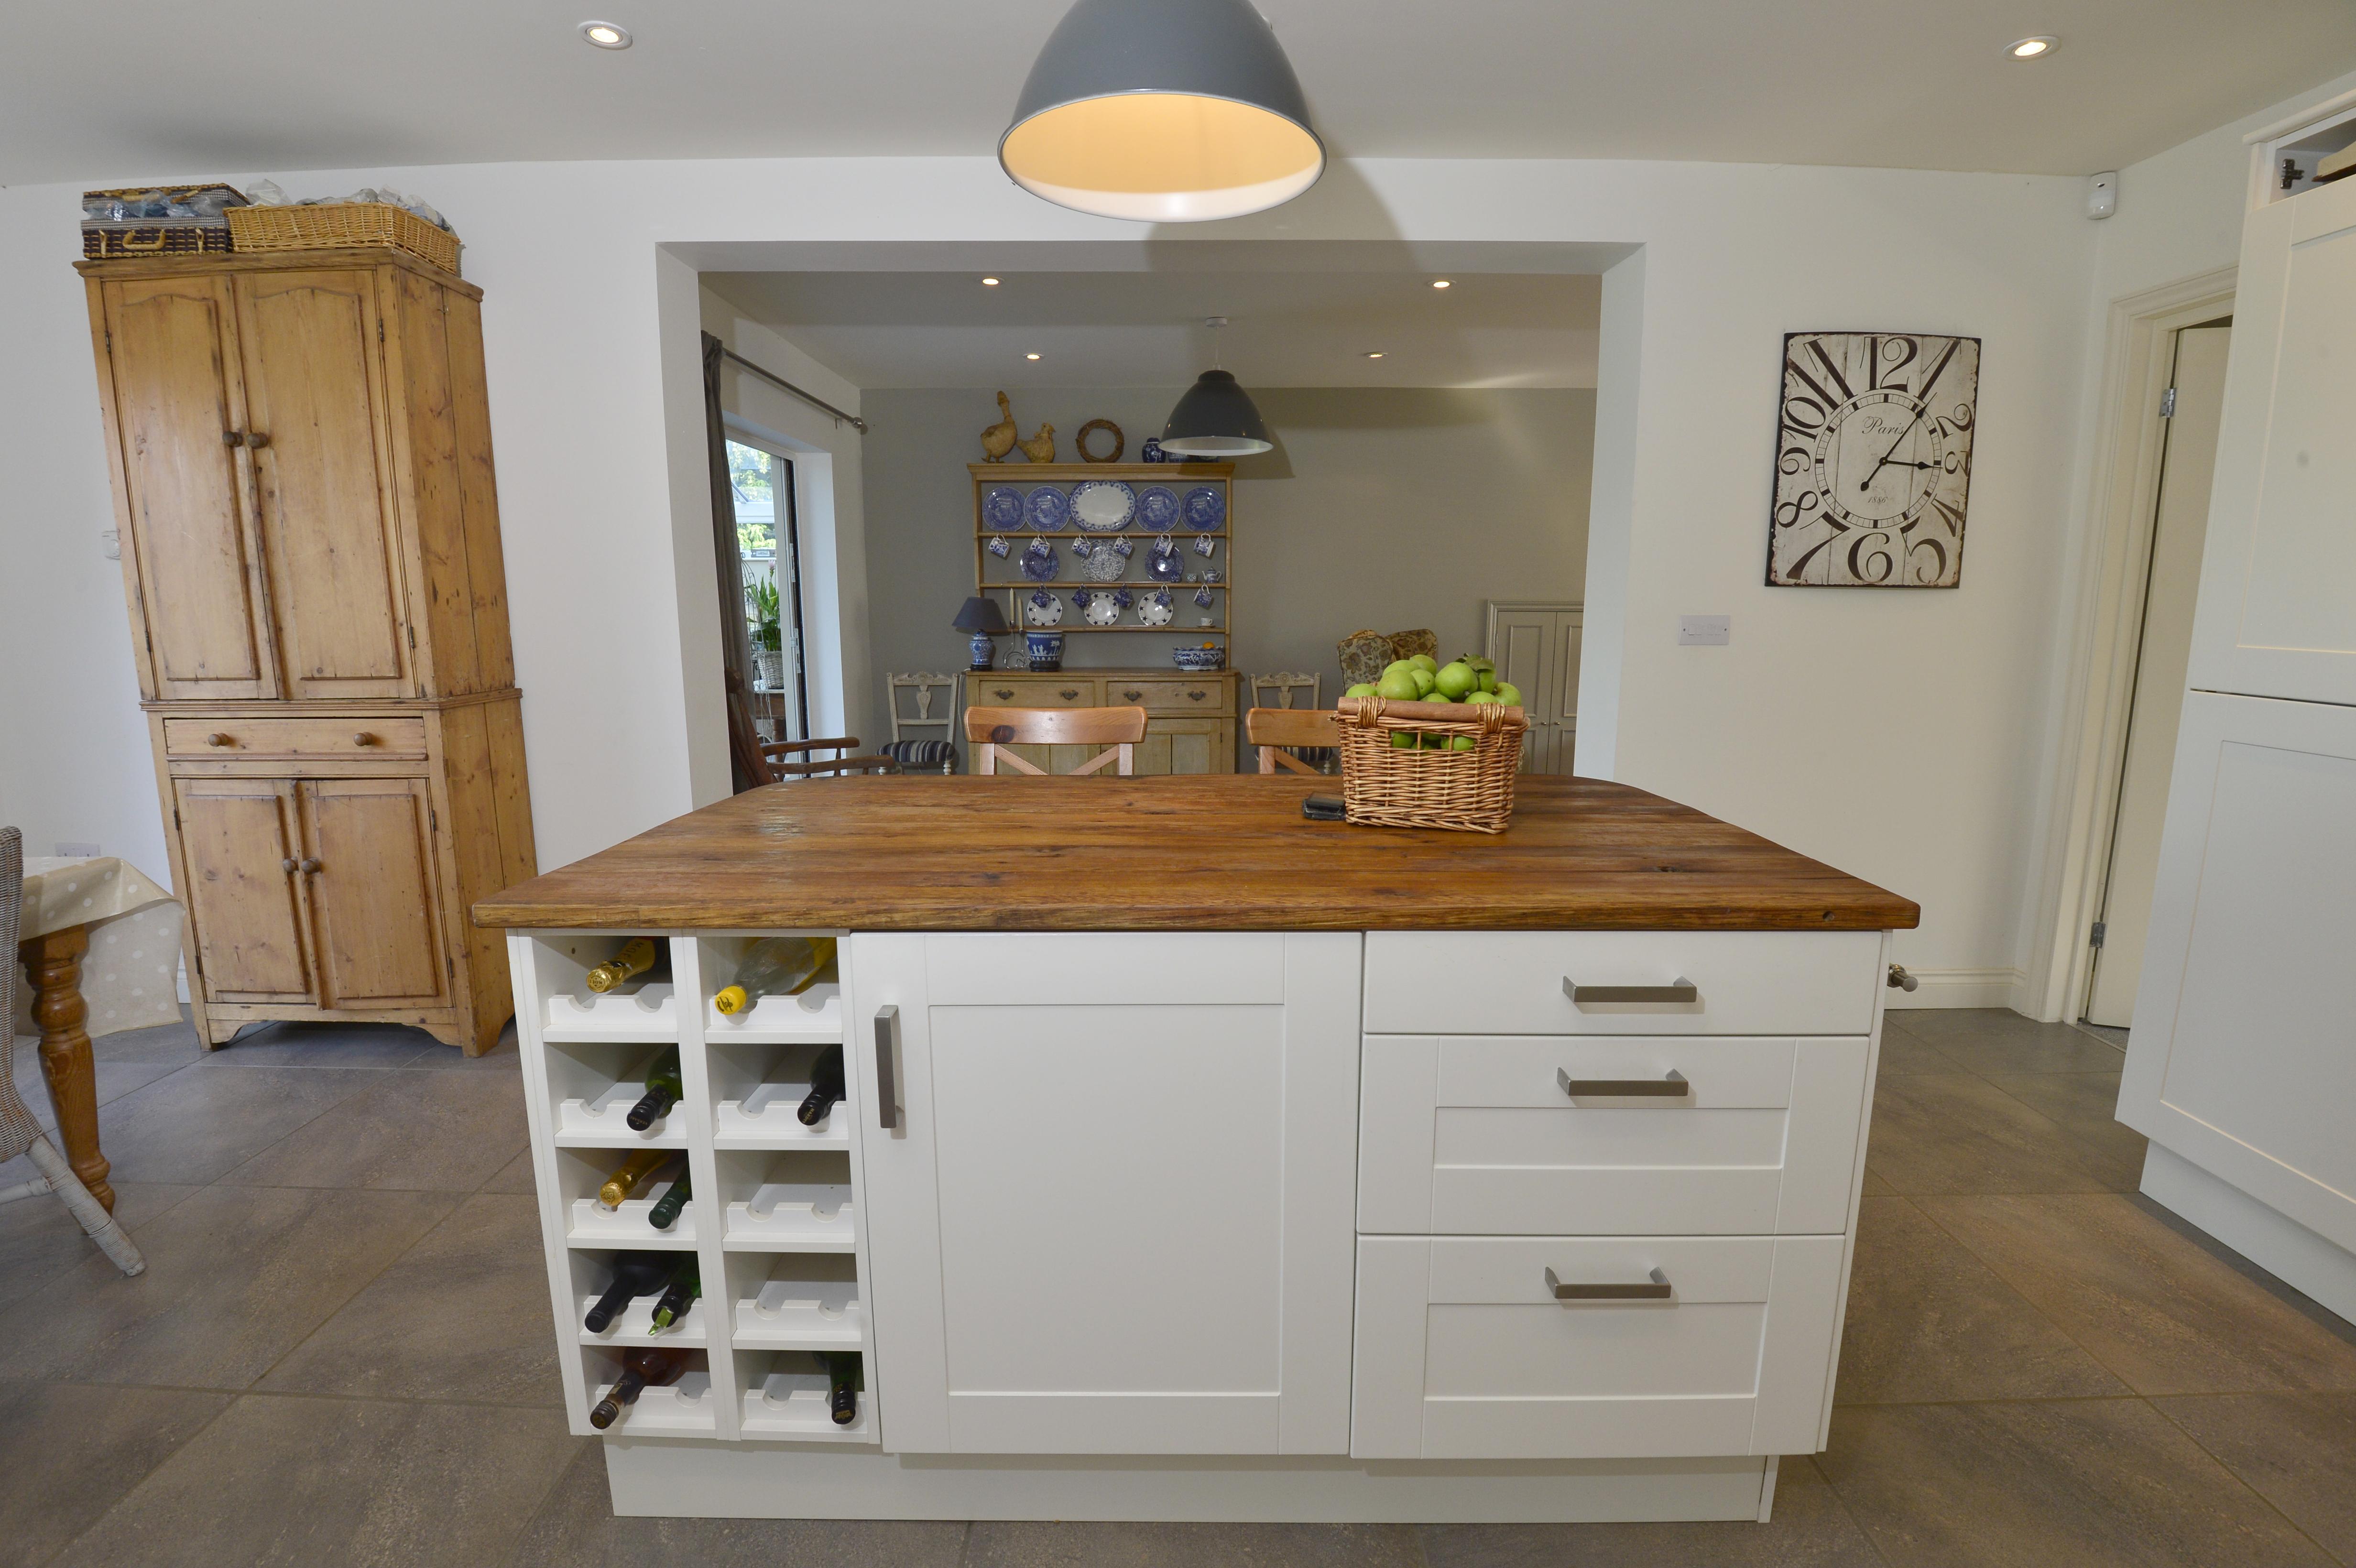  Kitchen Design by Sarah Maidment Interiors, interior designer, Berkhamsted, St. Albans, Hertfordshire